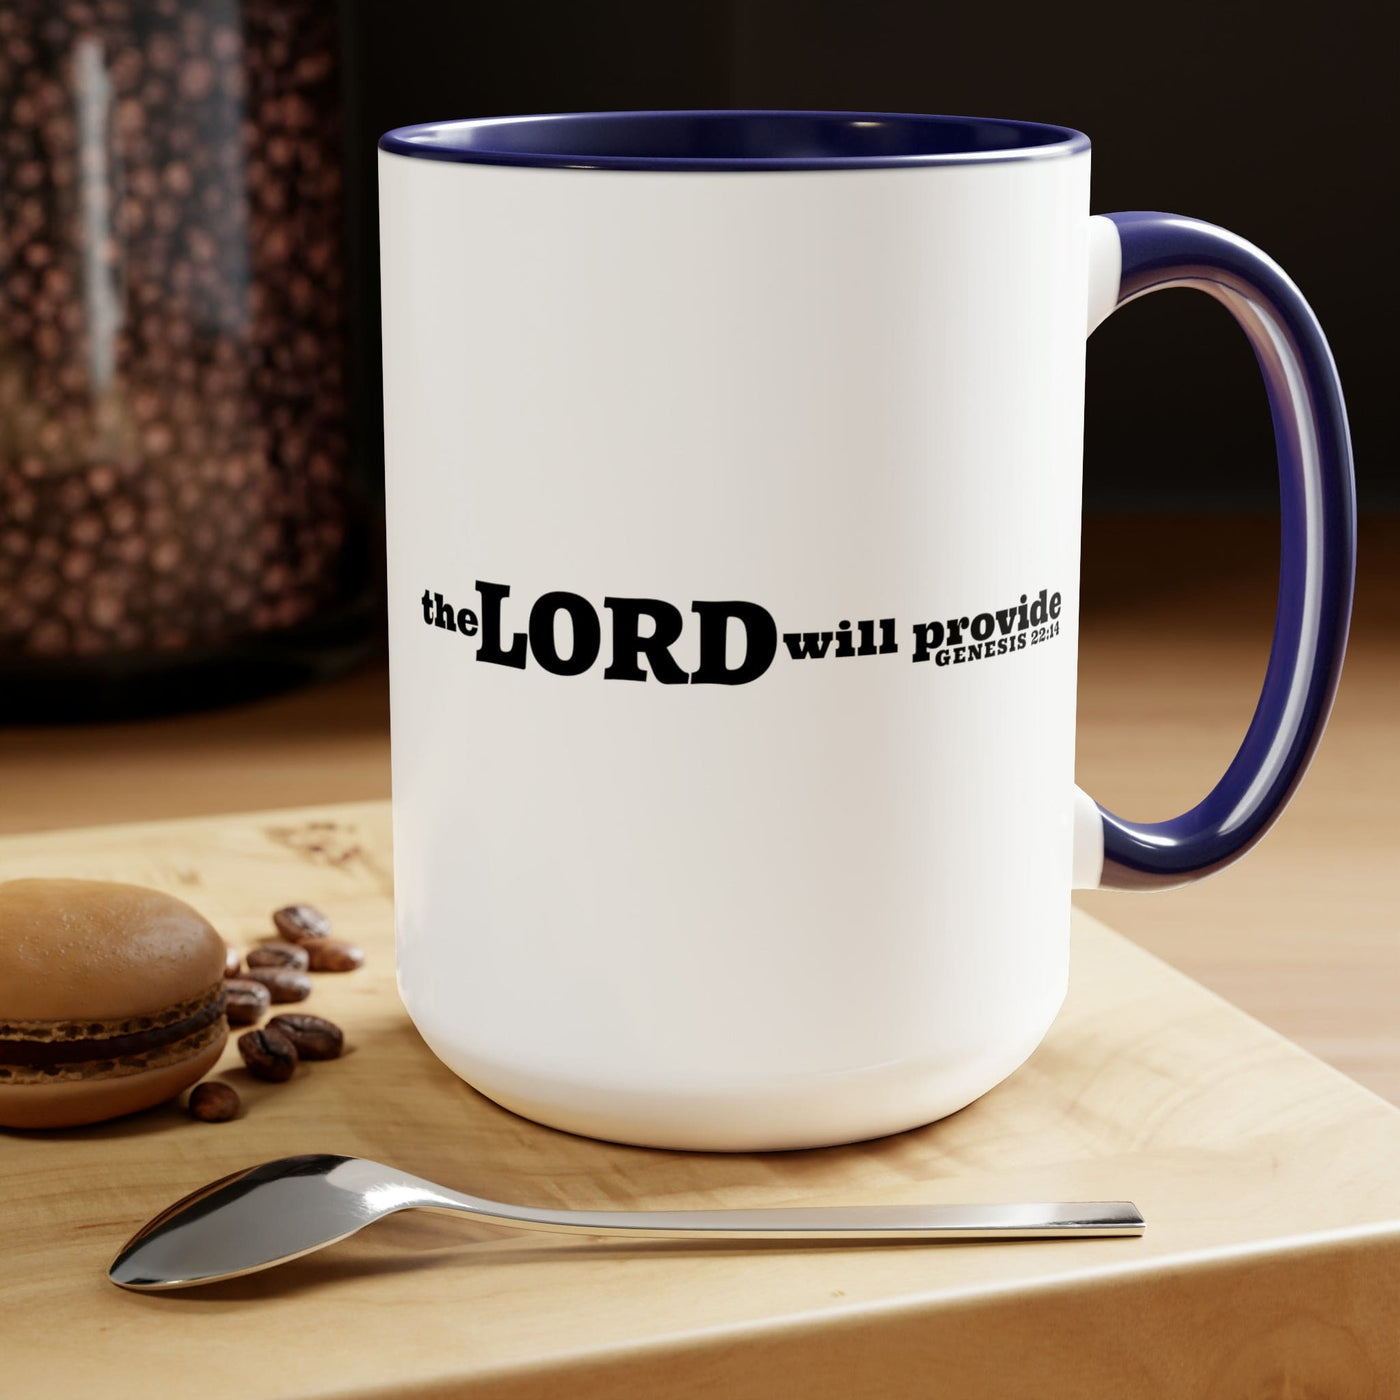 Accent Ceramic Coffee Mug 15oz - The Lord Will Provide - Genesis 22:14